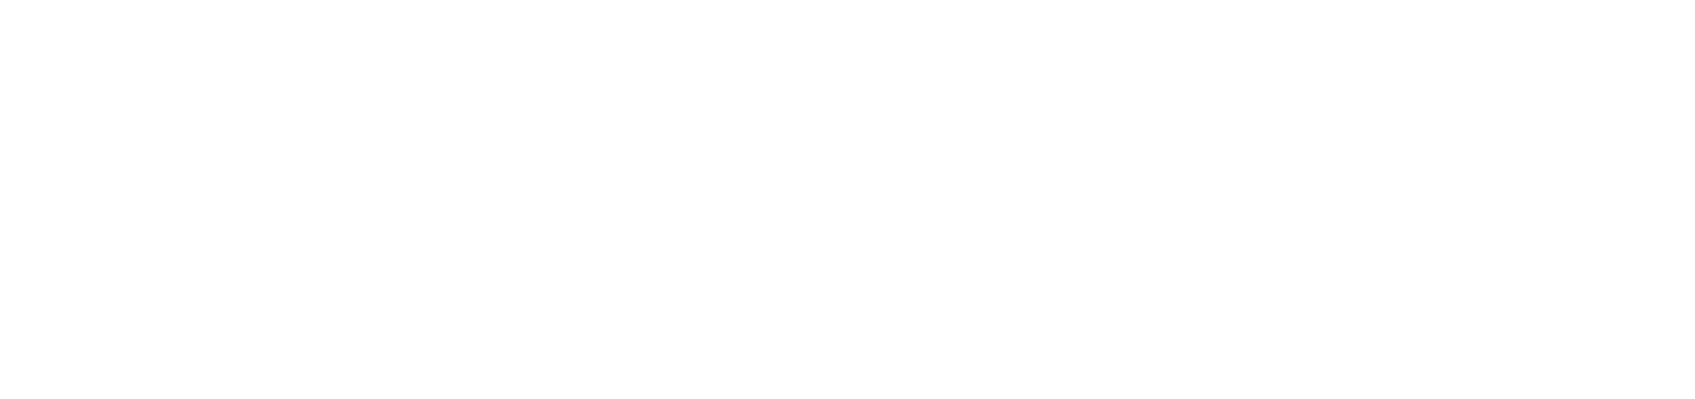 Alinma Bank logo large for dark backgrounds (transparent PNG)